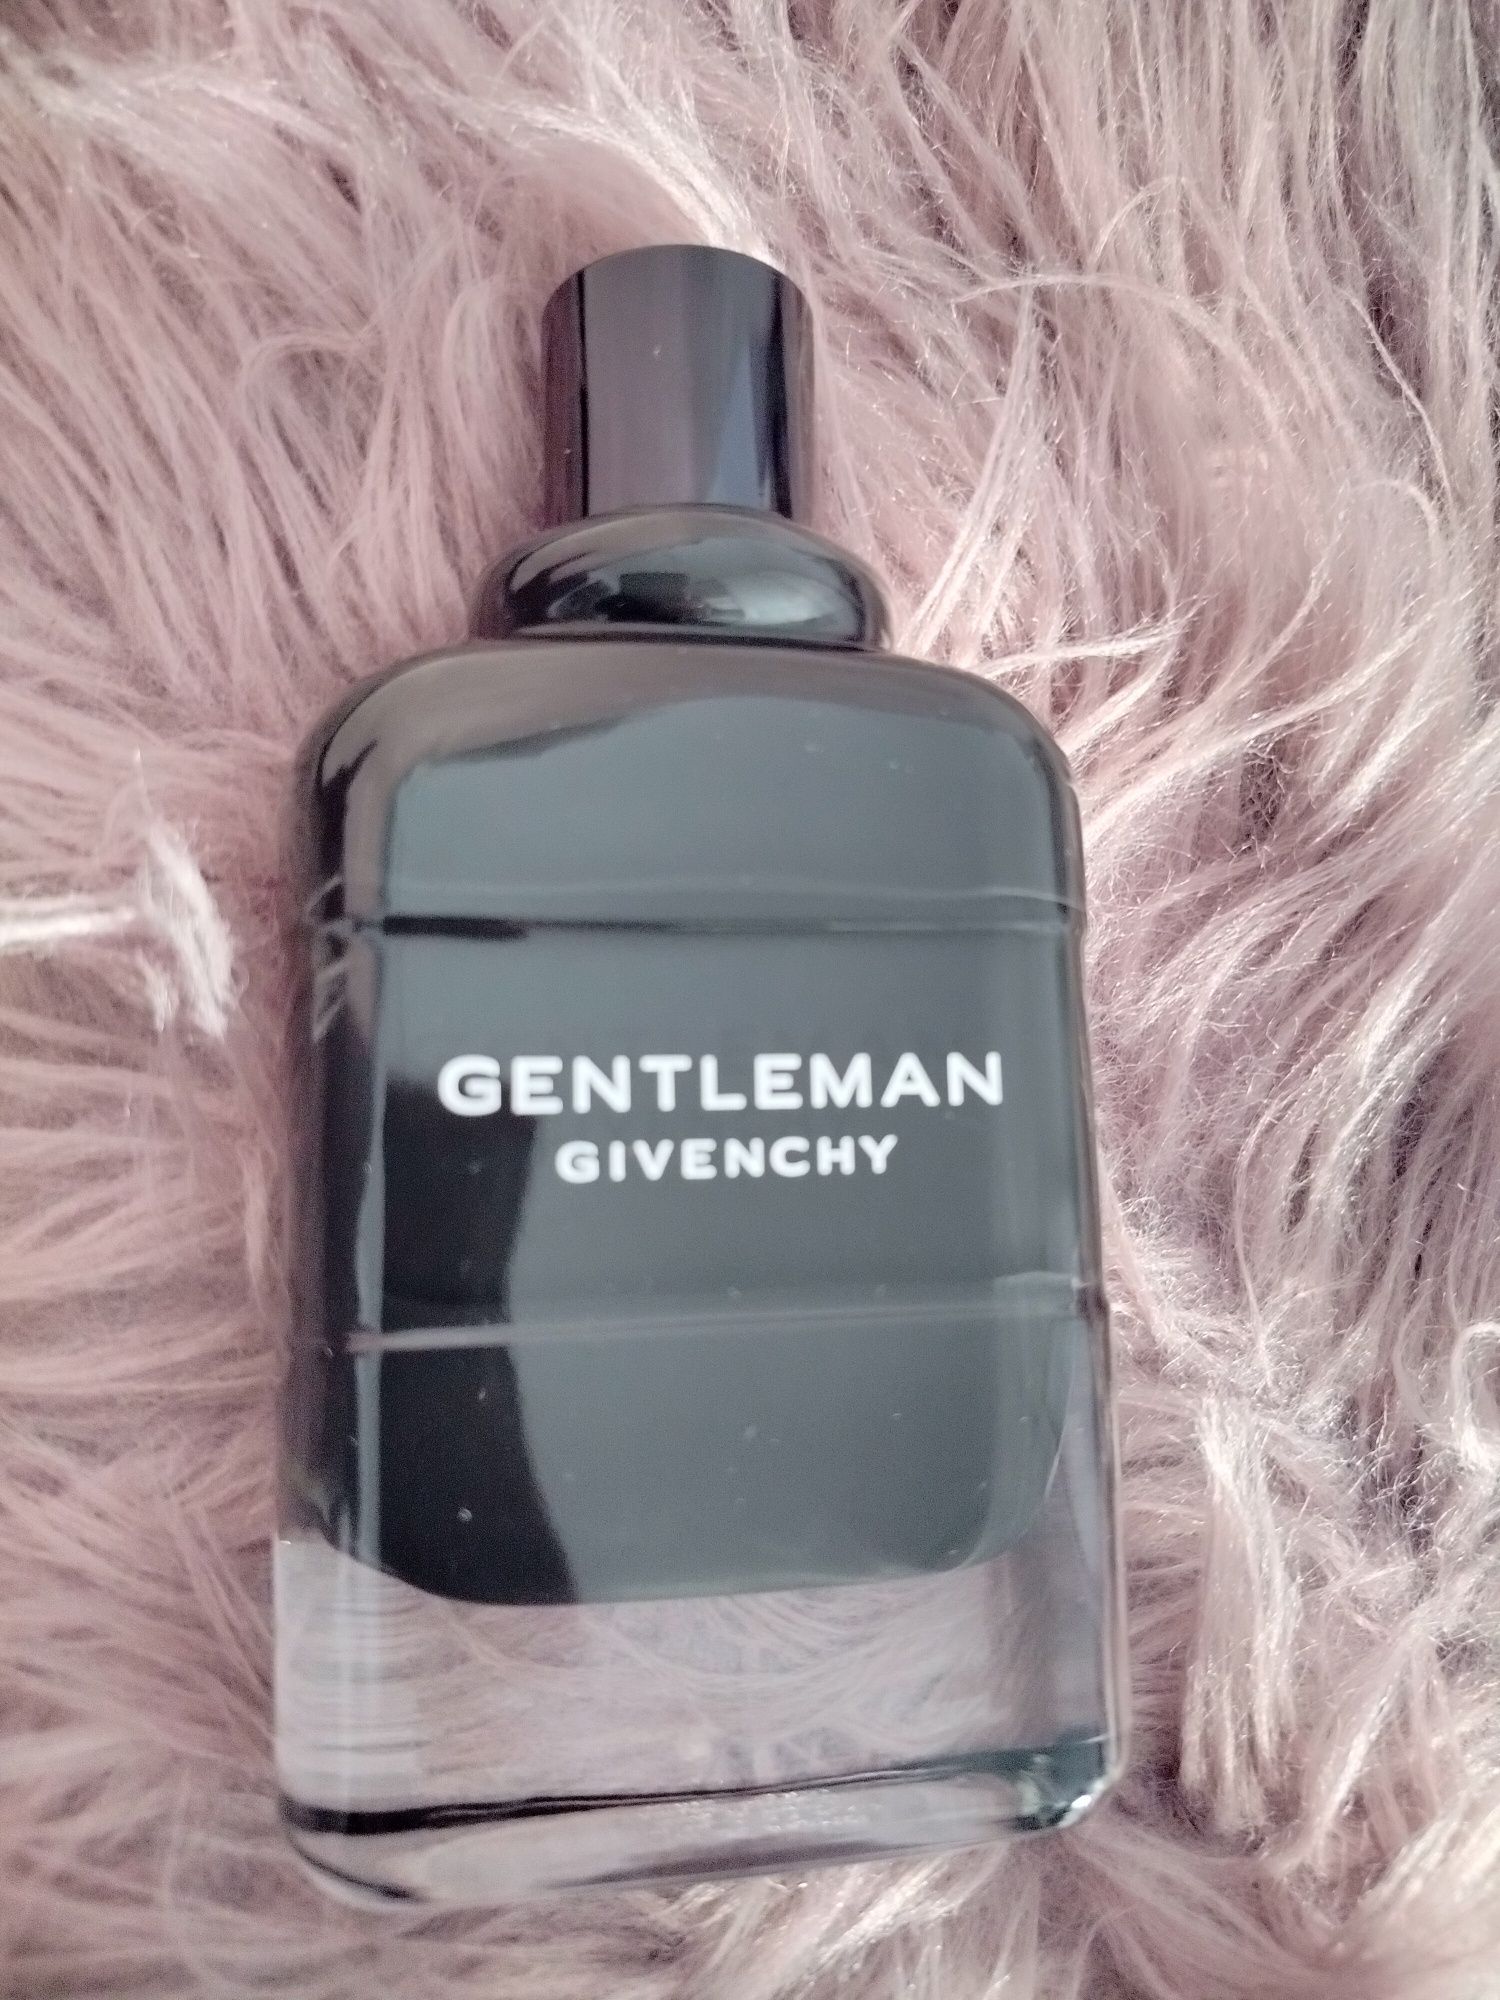 Parfum Givenchy Gentleman